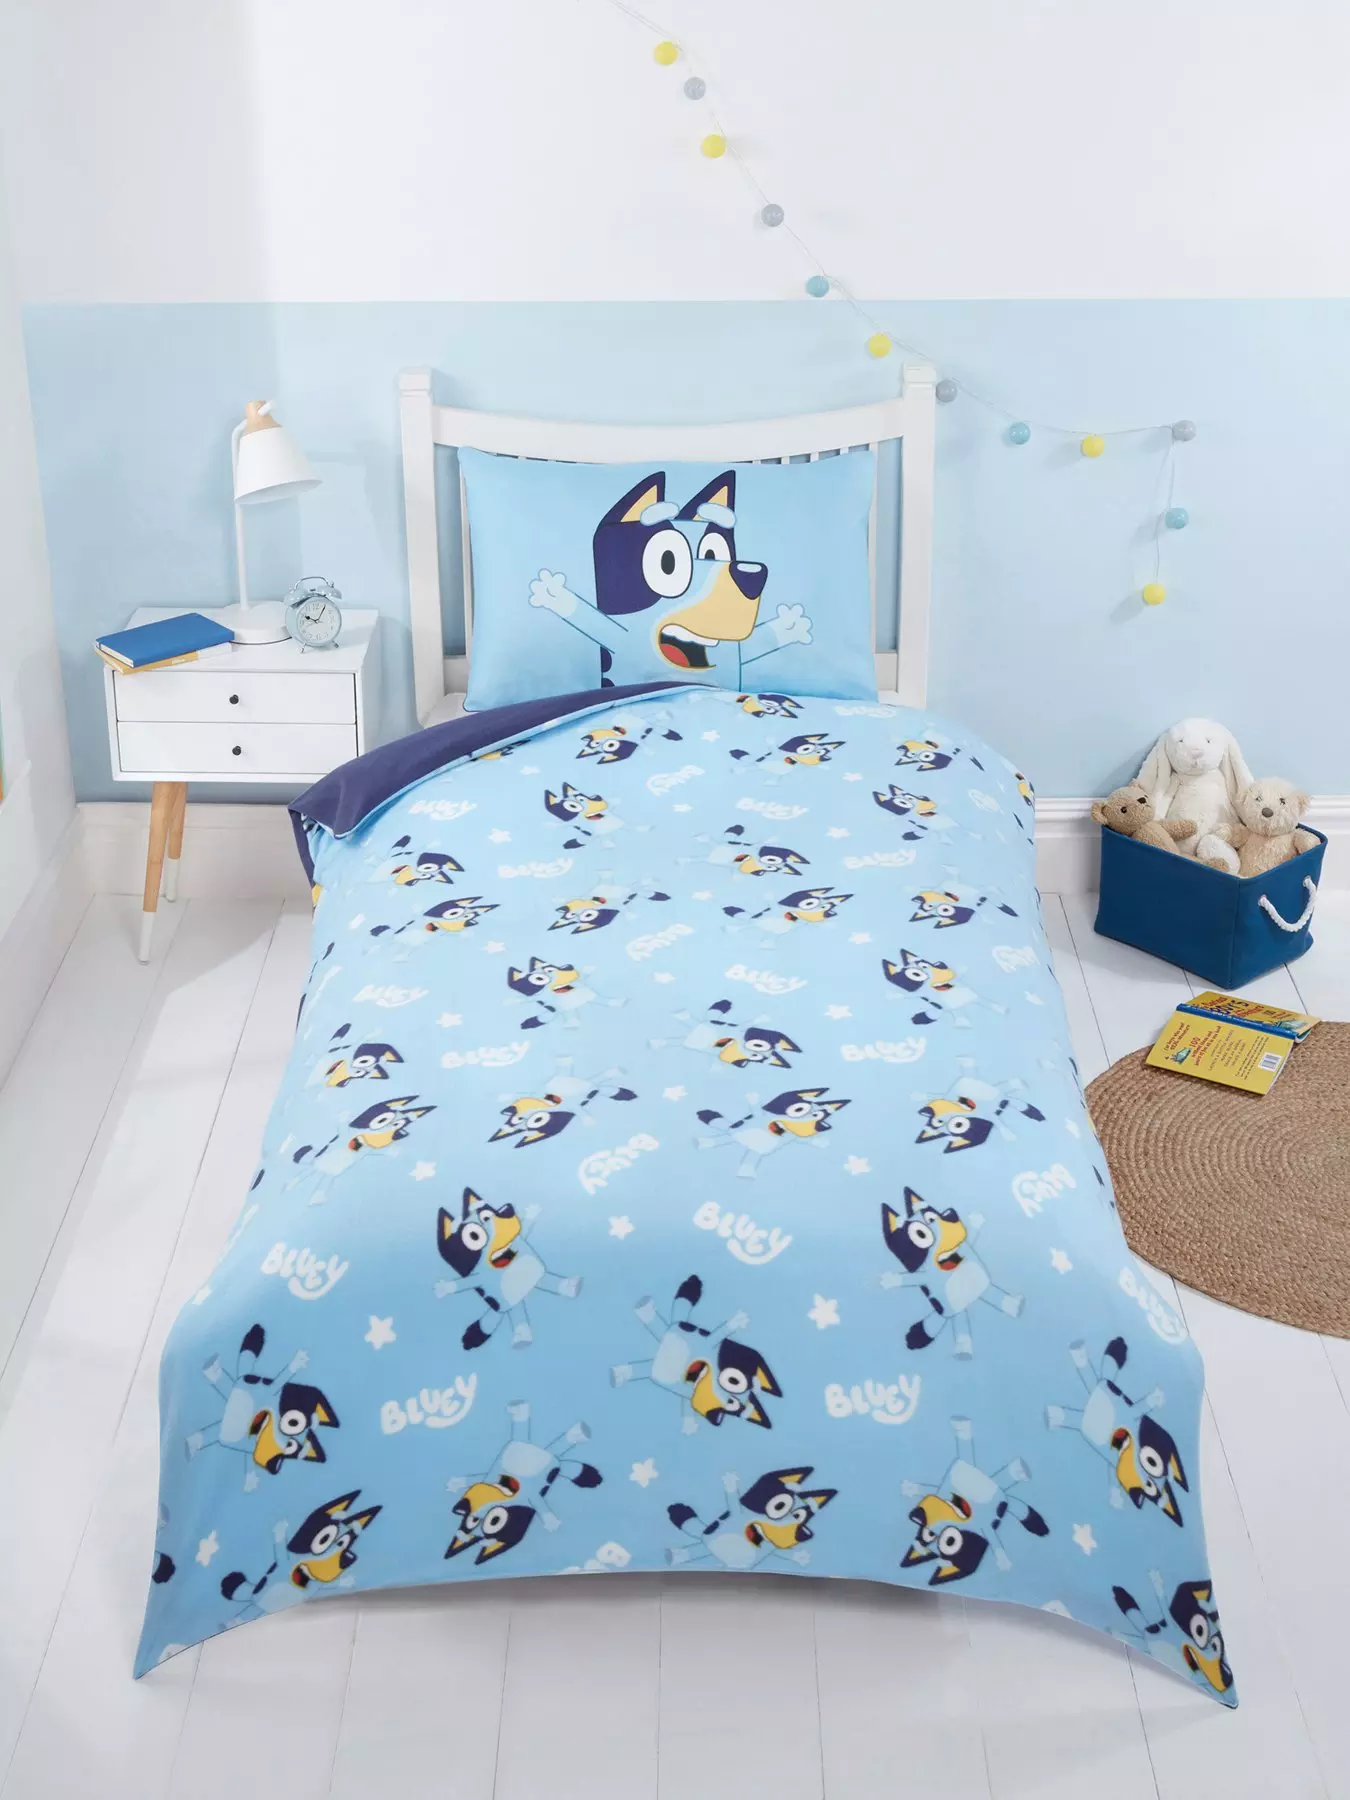 Disney Stitch Fleece Blanket Super Soft Blanket Throw Bed Accessories 150 x  130 Sofa Throw Bed Blankets Baby Yoda Gifts (Light Blue Stitch)